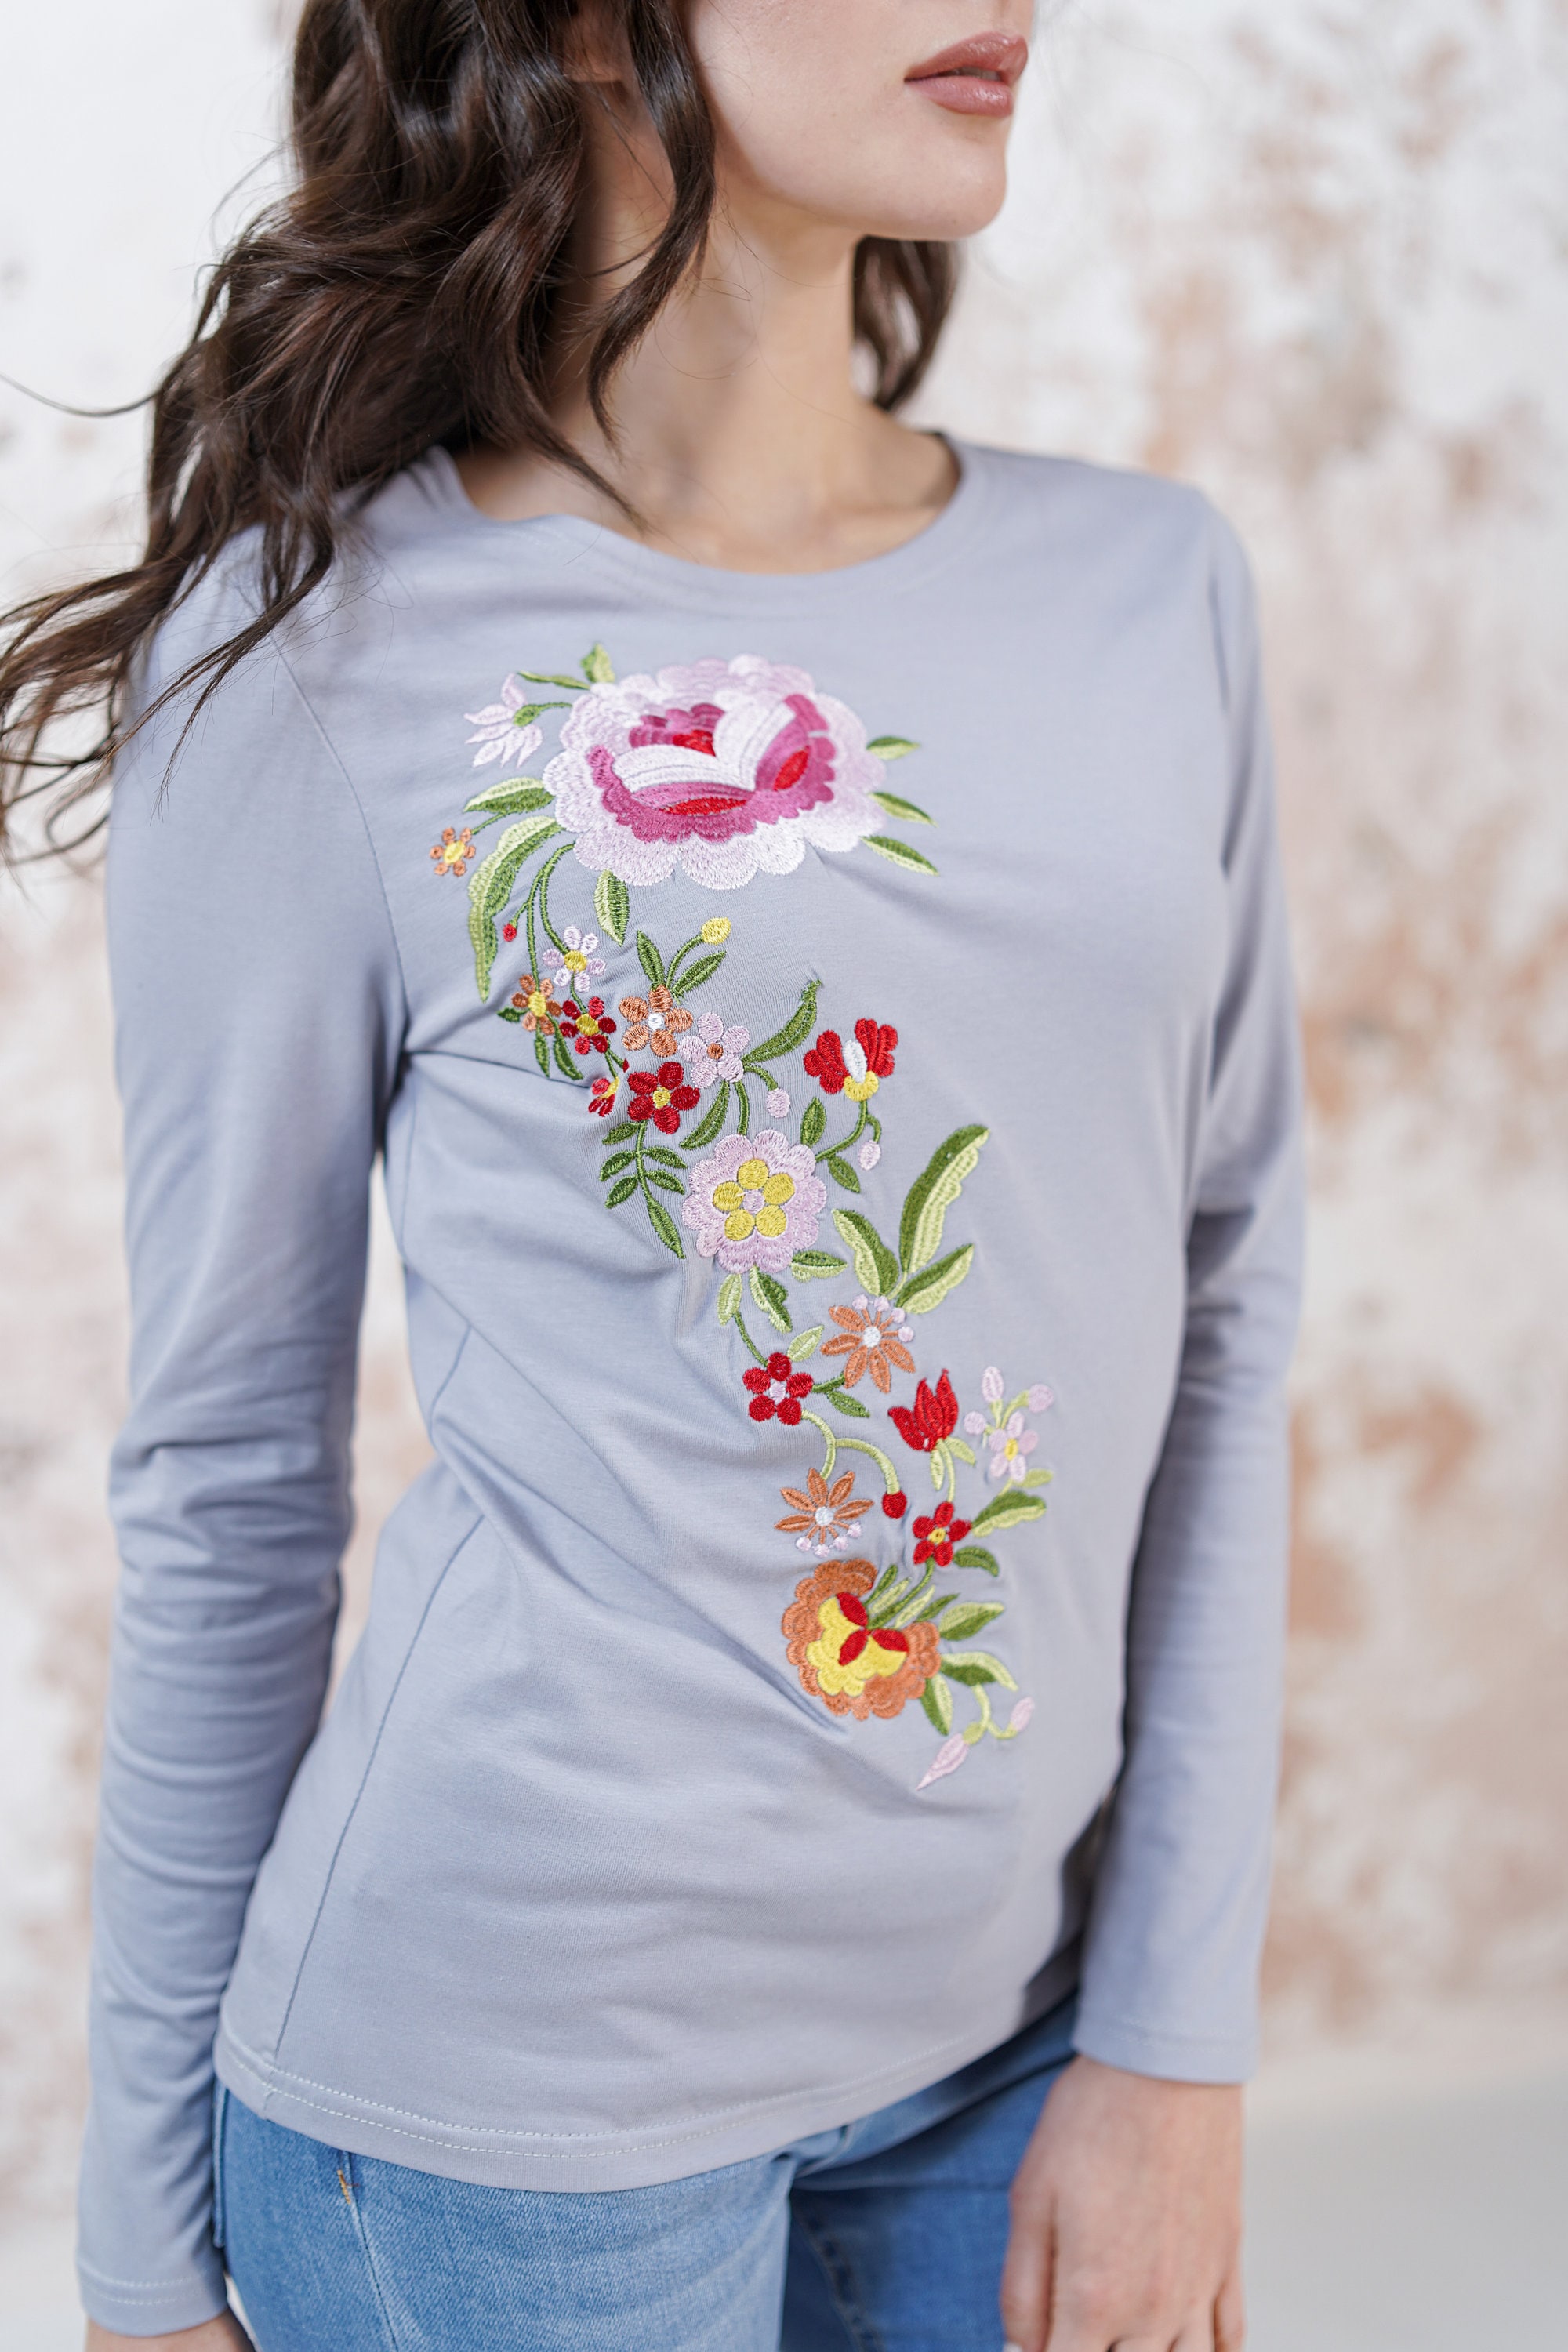 Botanical Tshirt Embroidered Tops For Women Floral Etsy Uk